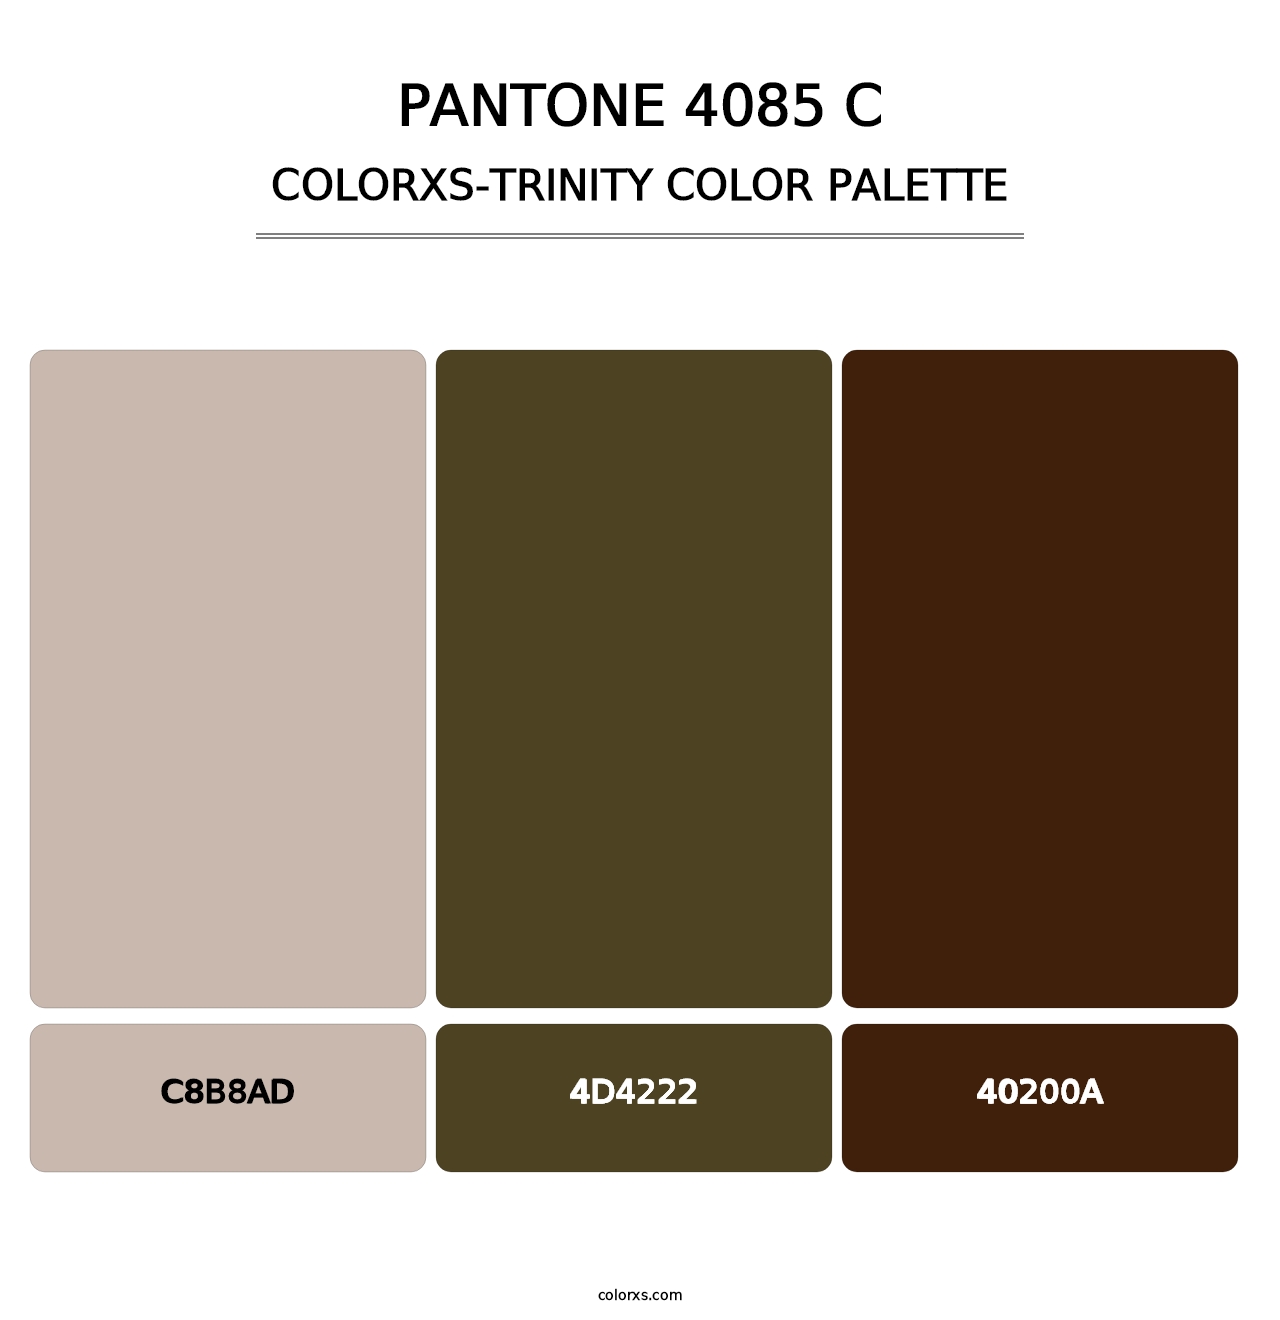 PANTONE 4085 C - Colorxs Trinity Palette